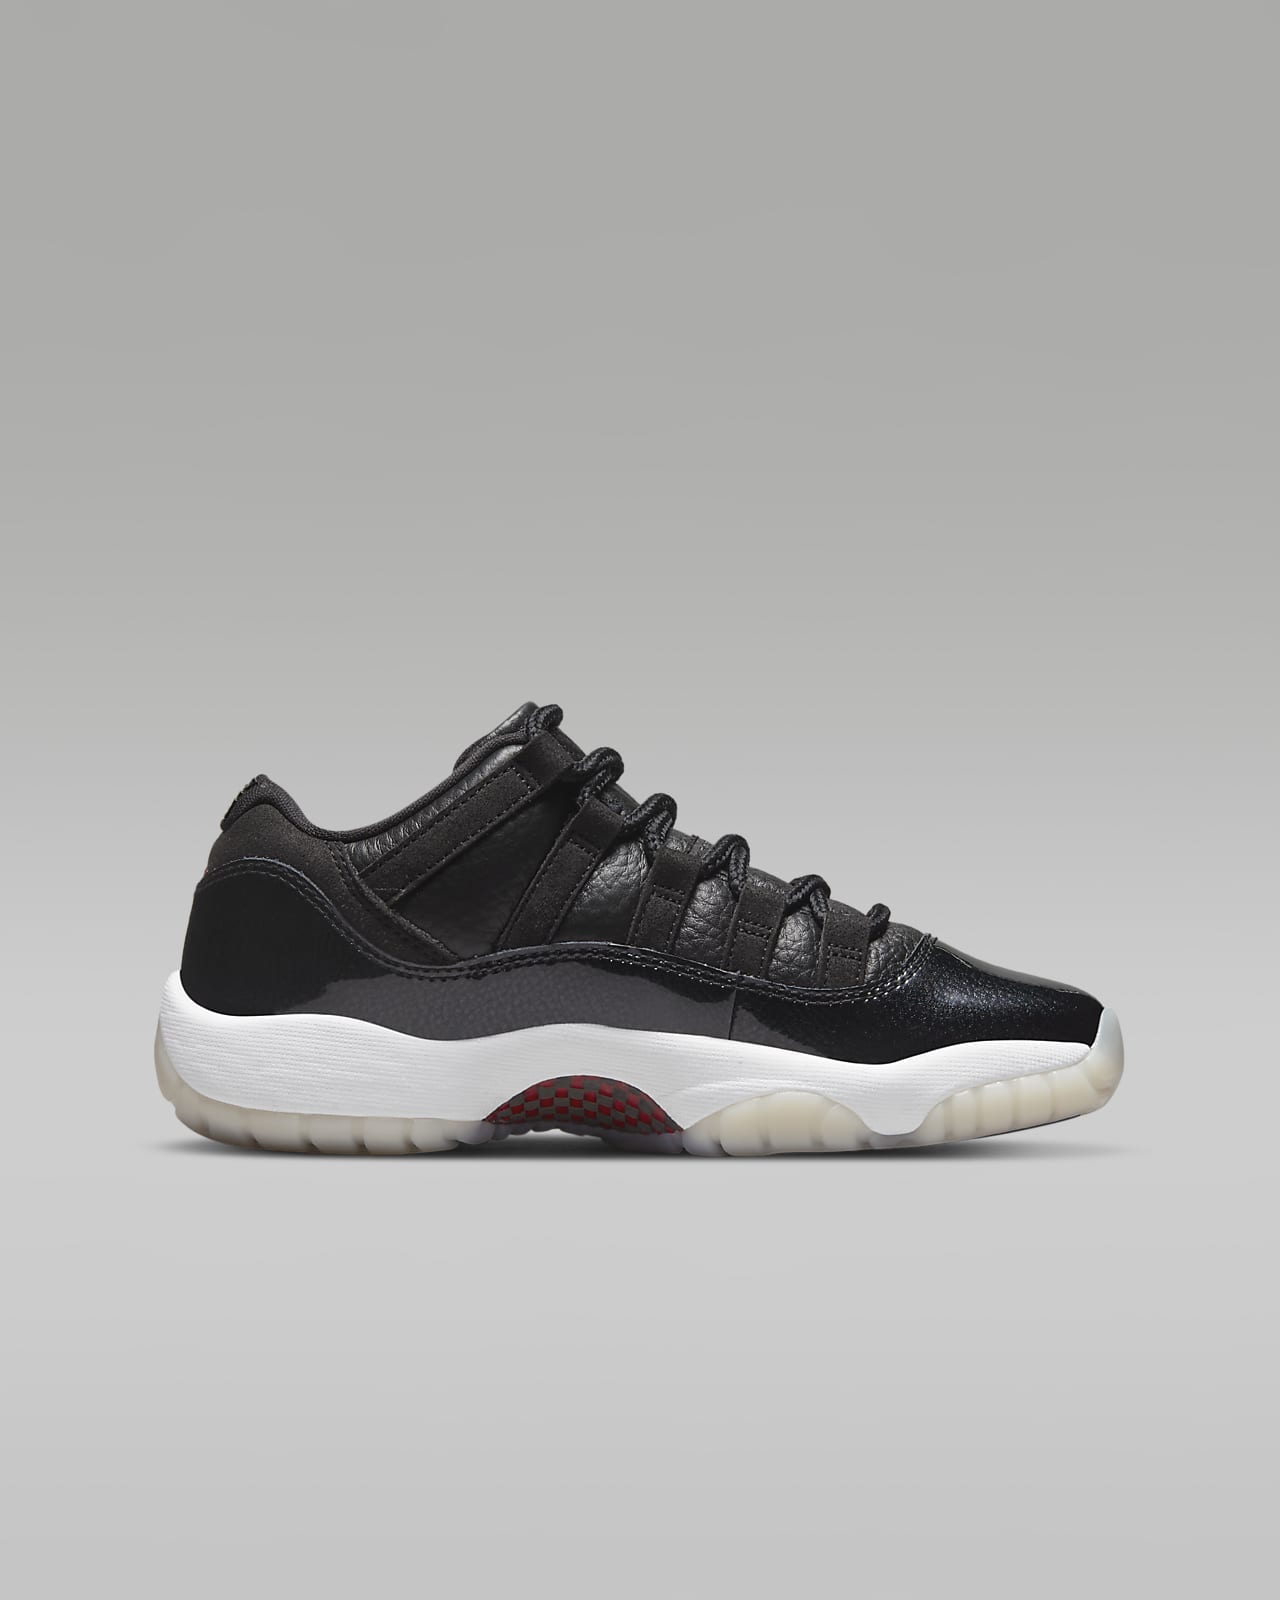 Air Jordan Black/White Fabric and Patent Leather Jordan 11 Retro